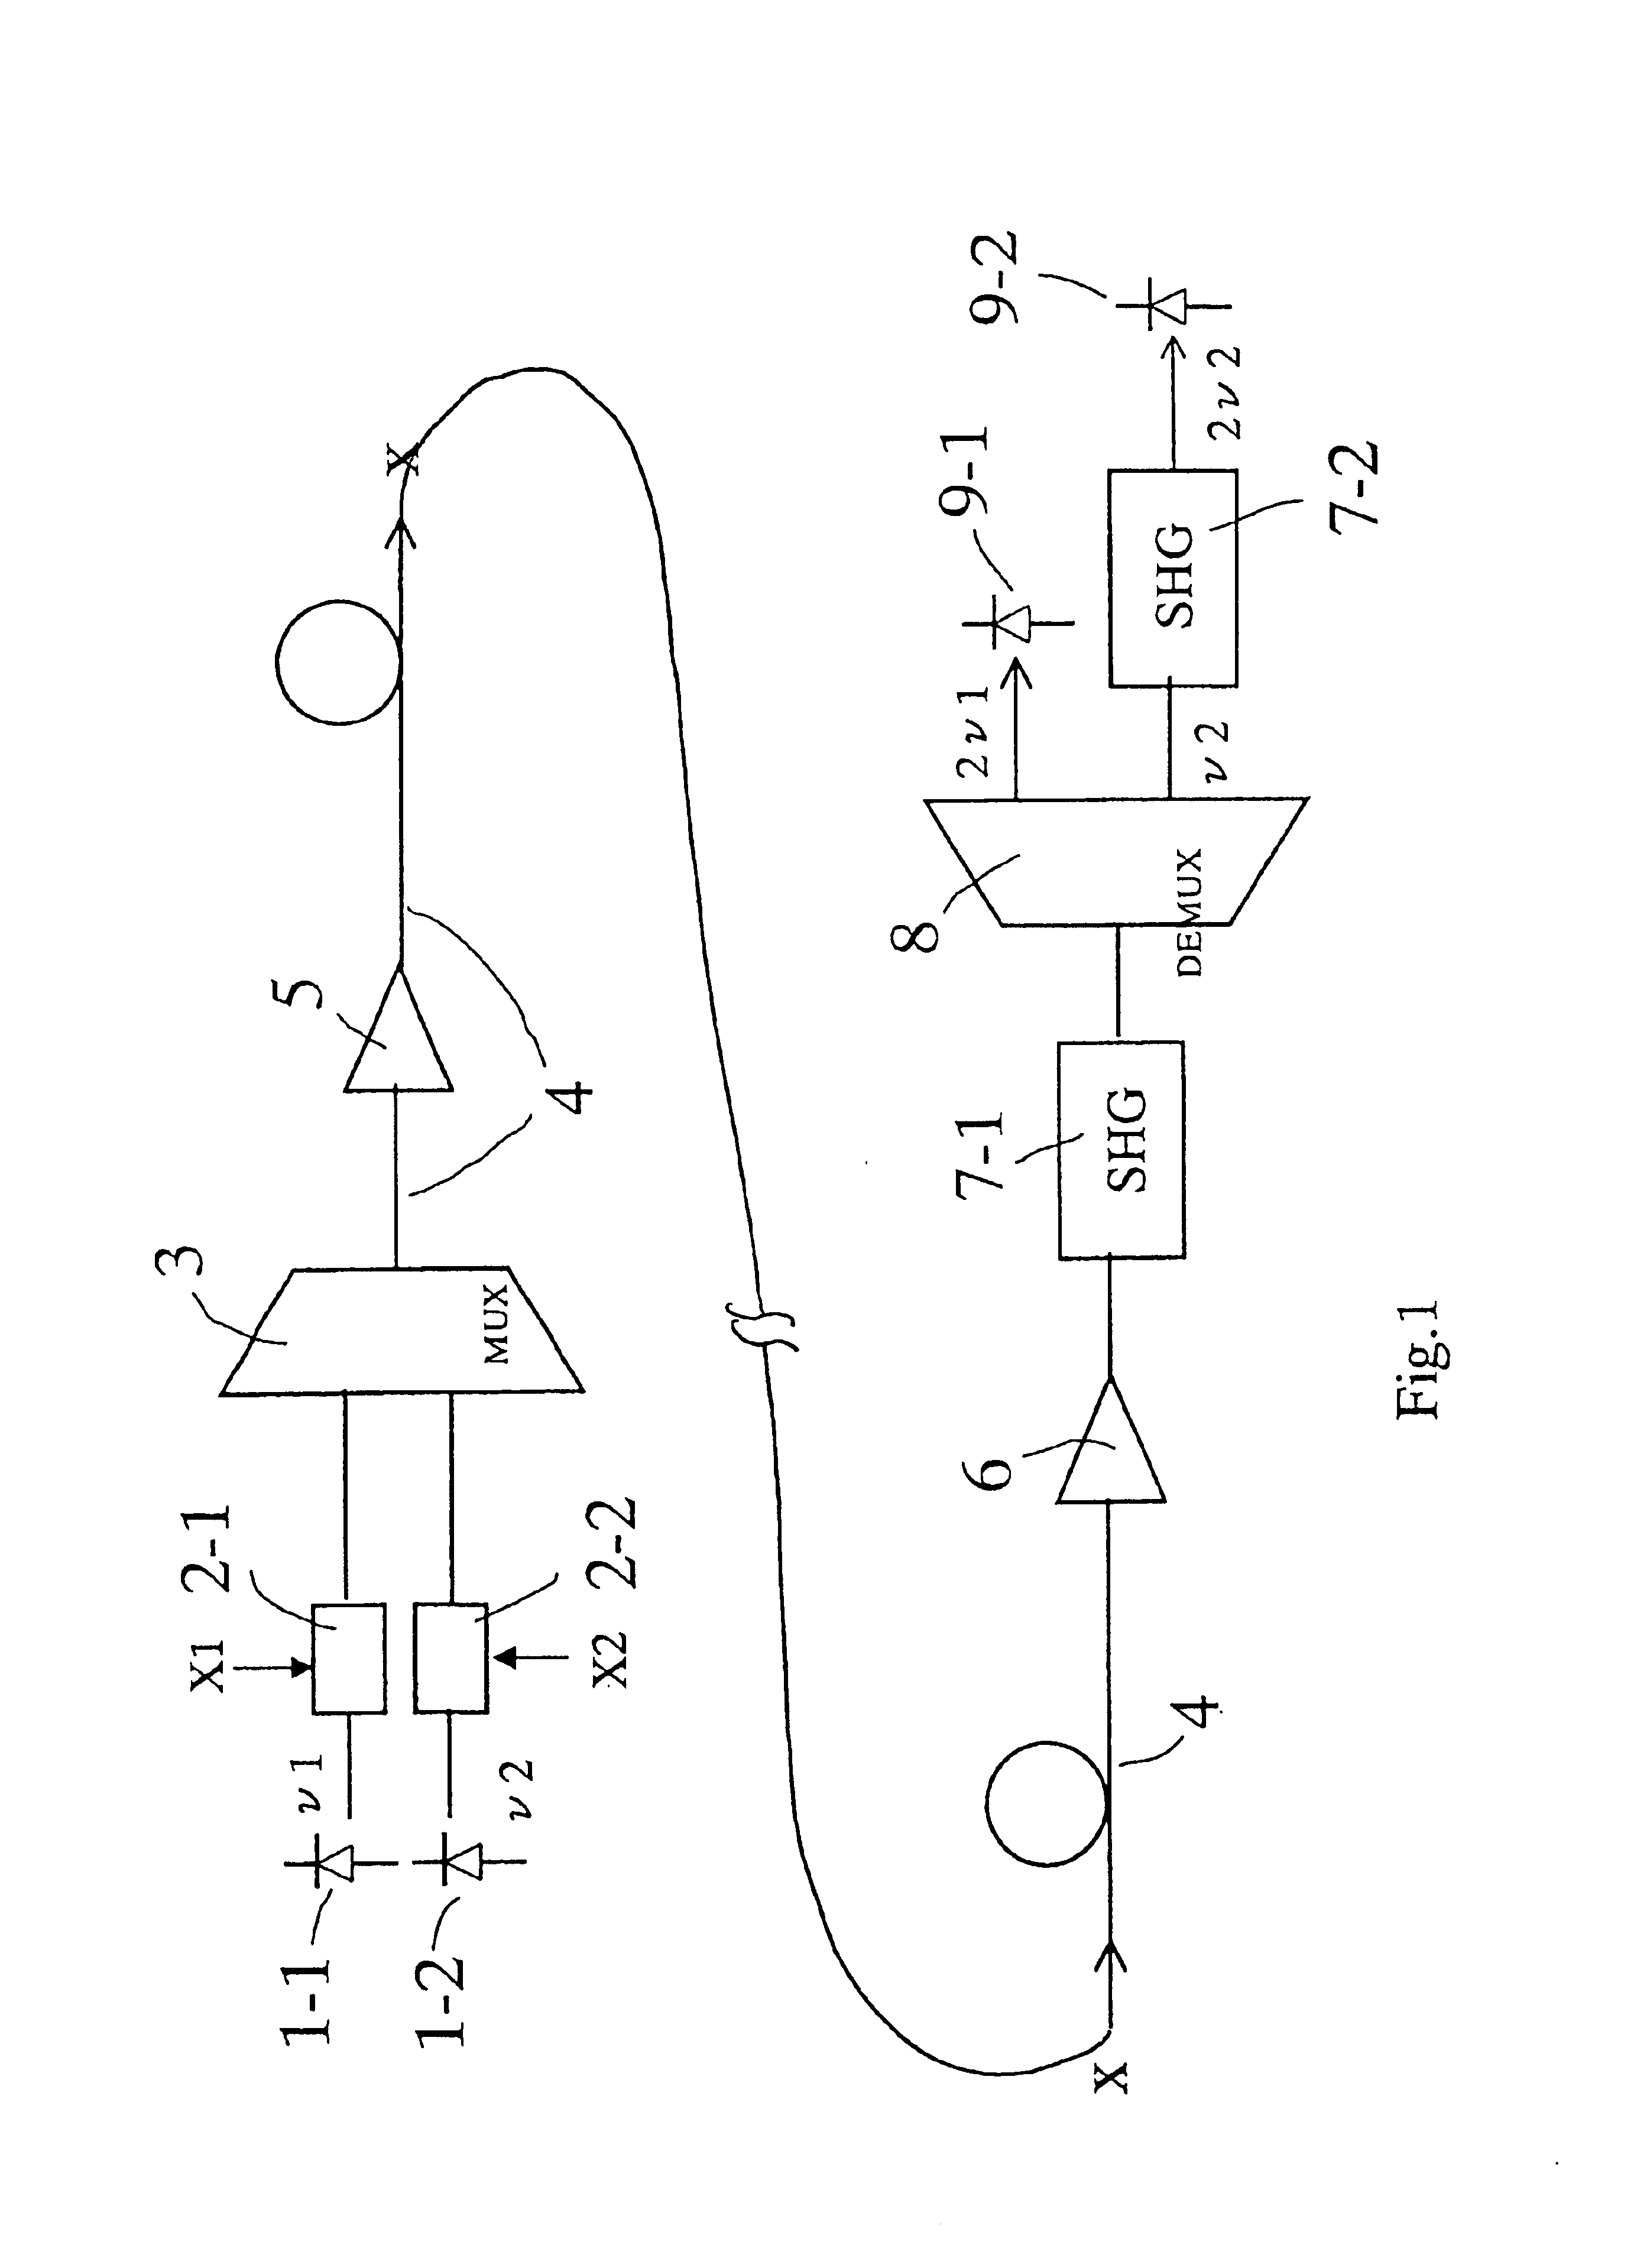 Optical circuit with harmonic generator